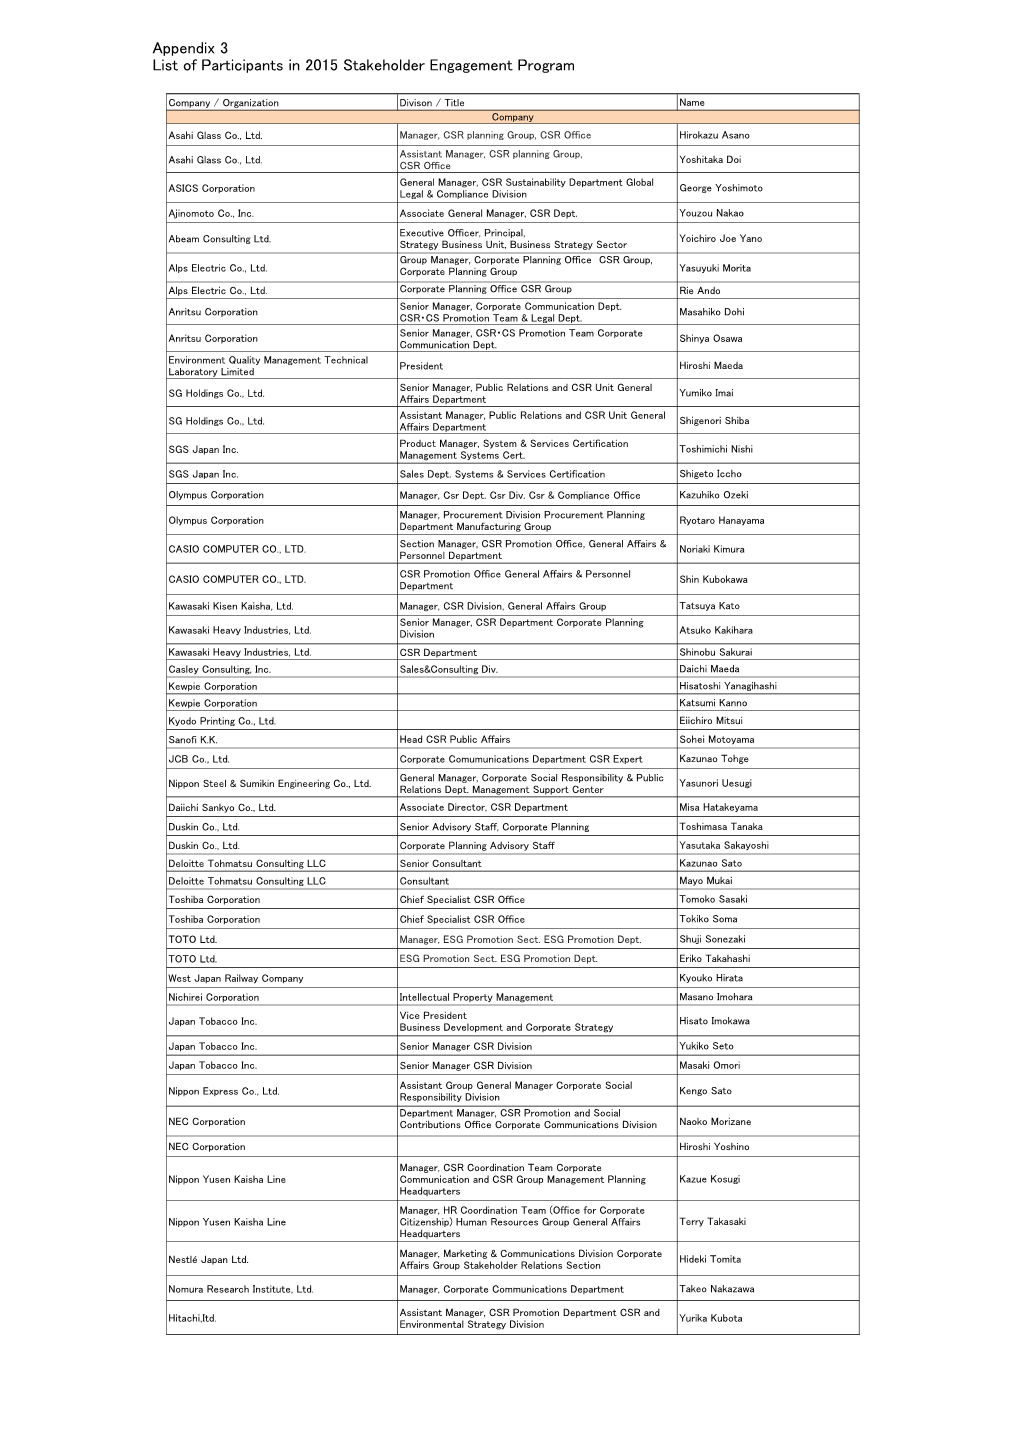 Appendix 3 List of Participants in 2015 Stakeholder Engagement Program